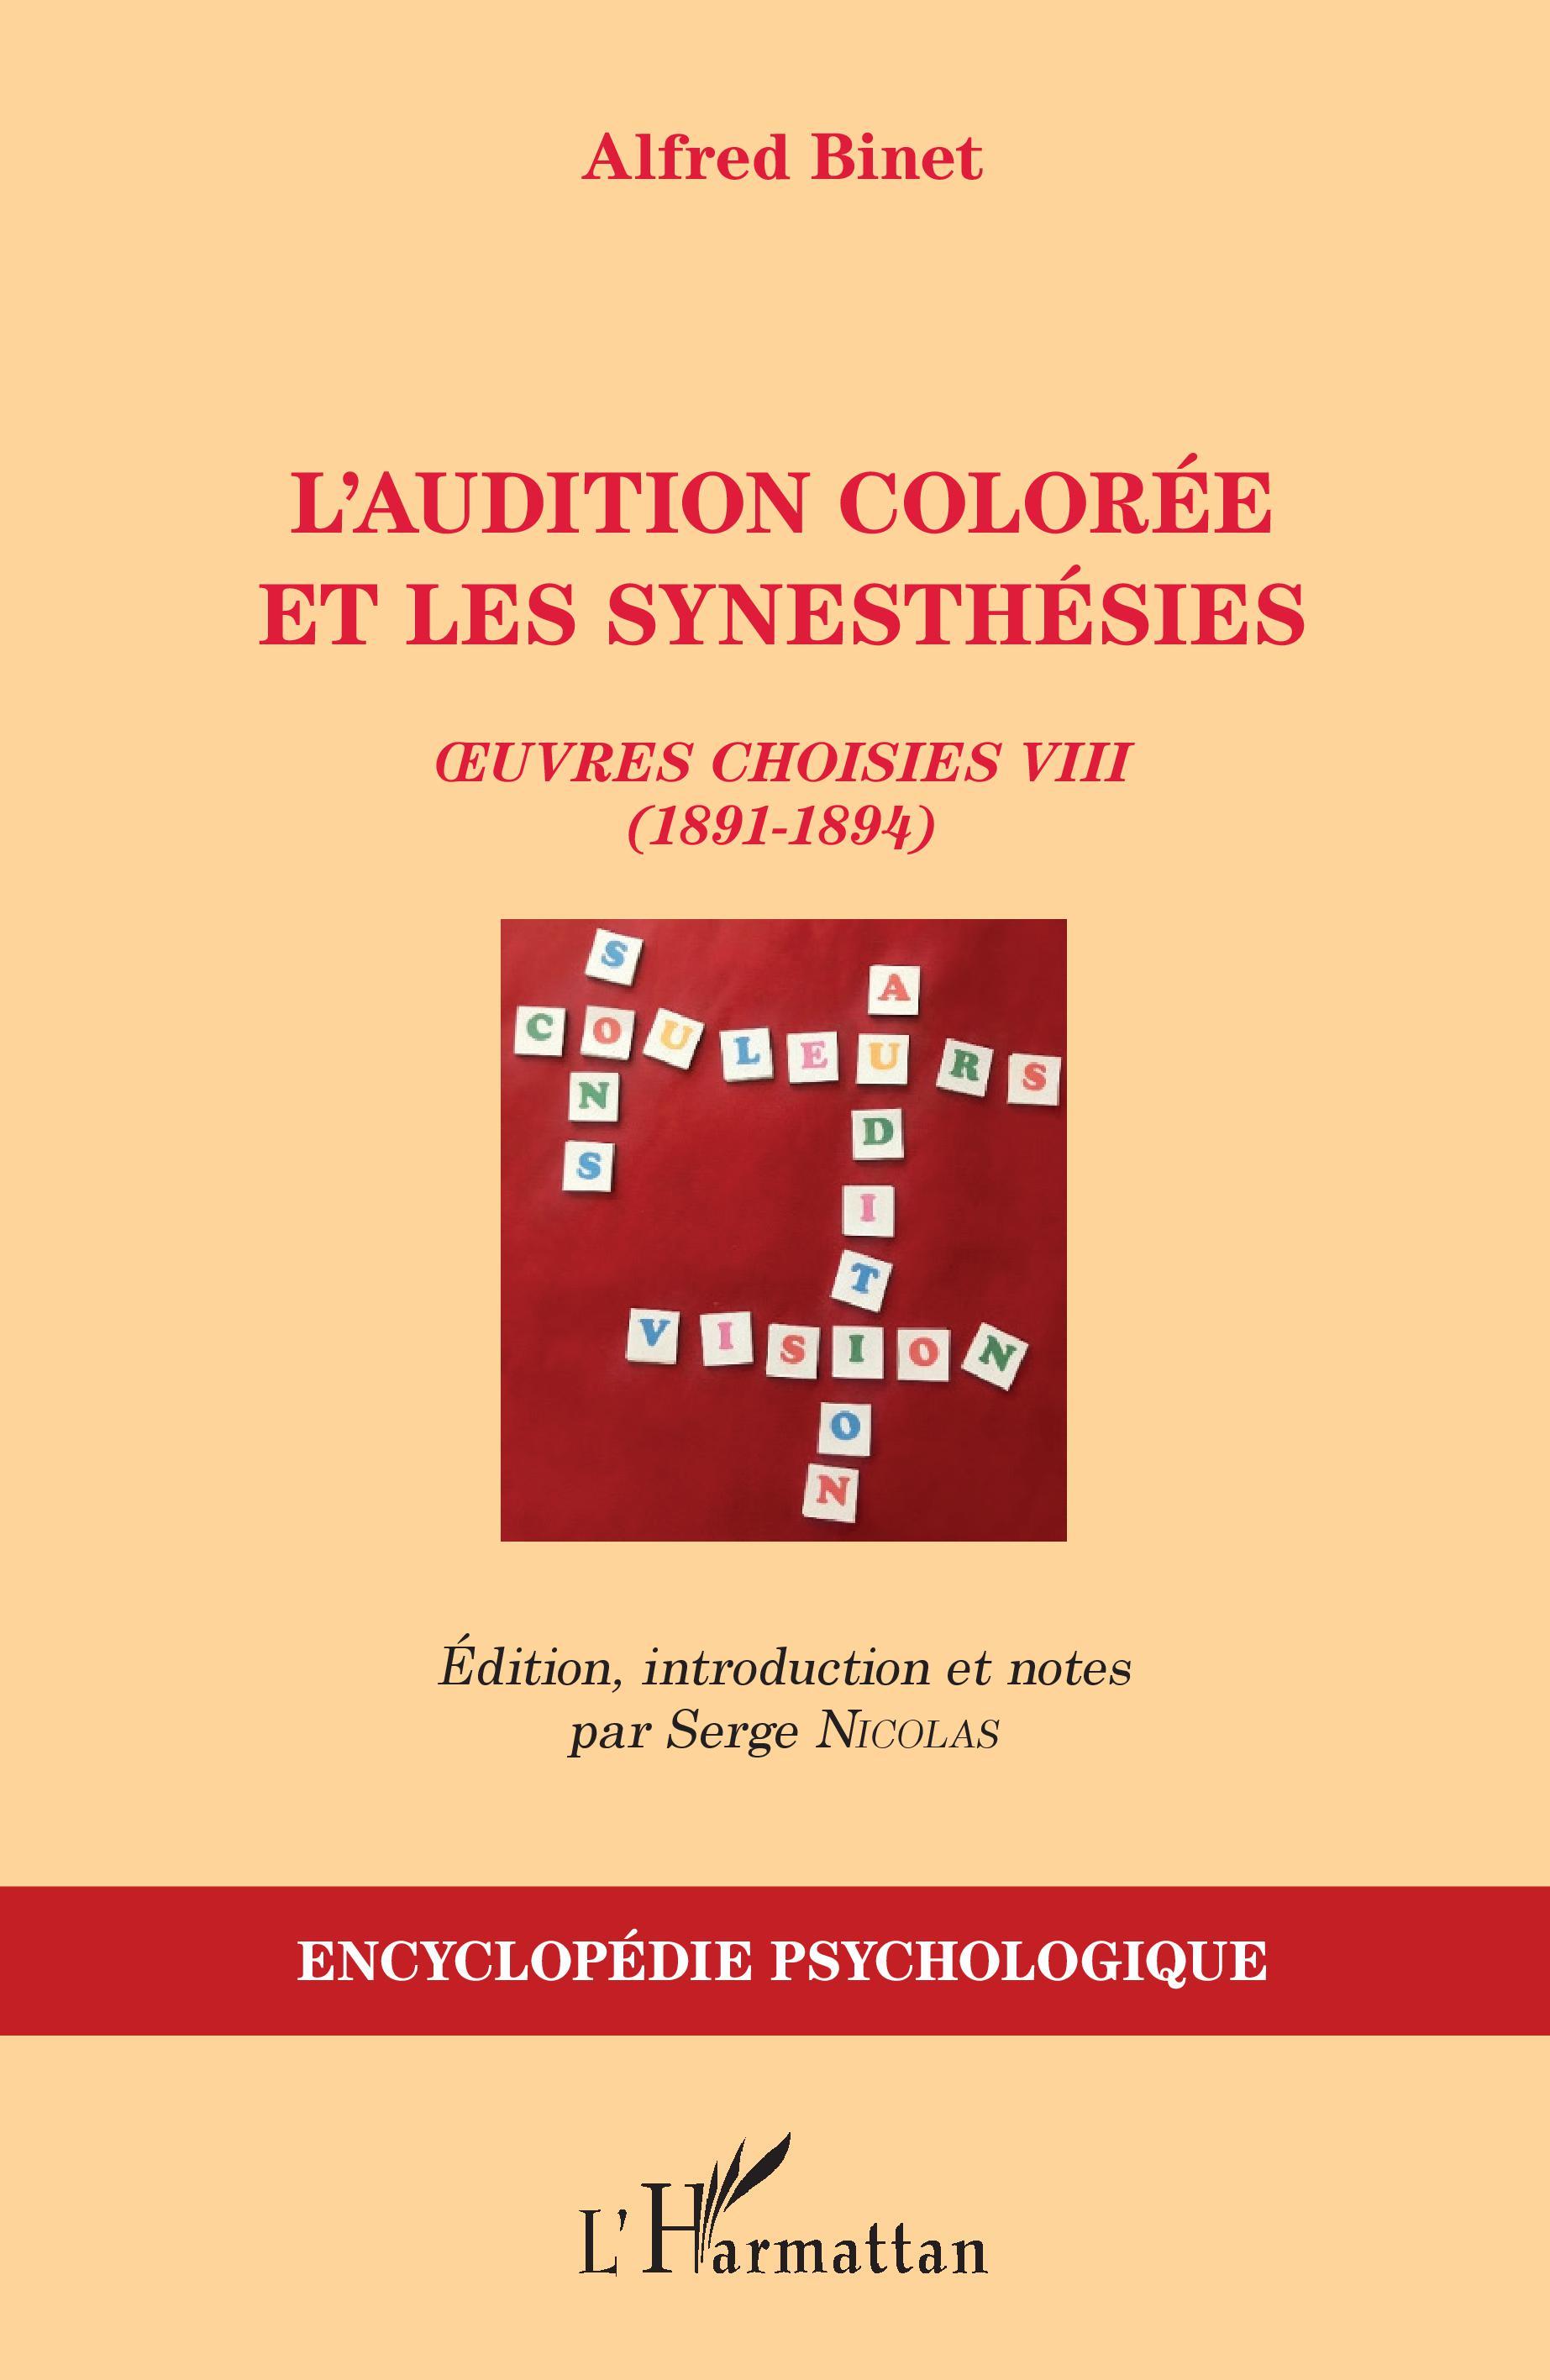 L'audition colorée et les synesthésies, Oeuvres choisies VIII (1891-1894) - Alfred Binet (9782343204970-front-cover)